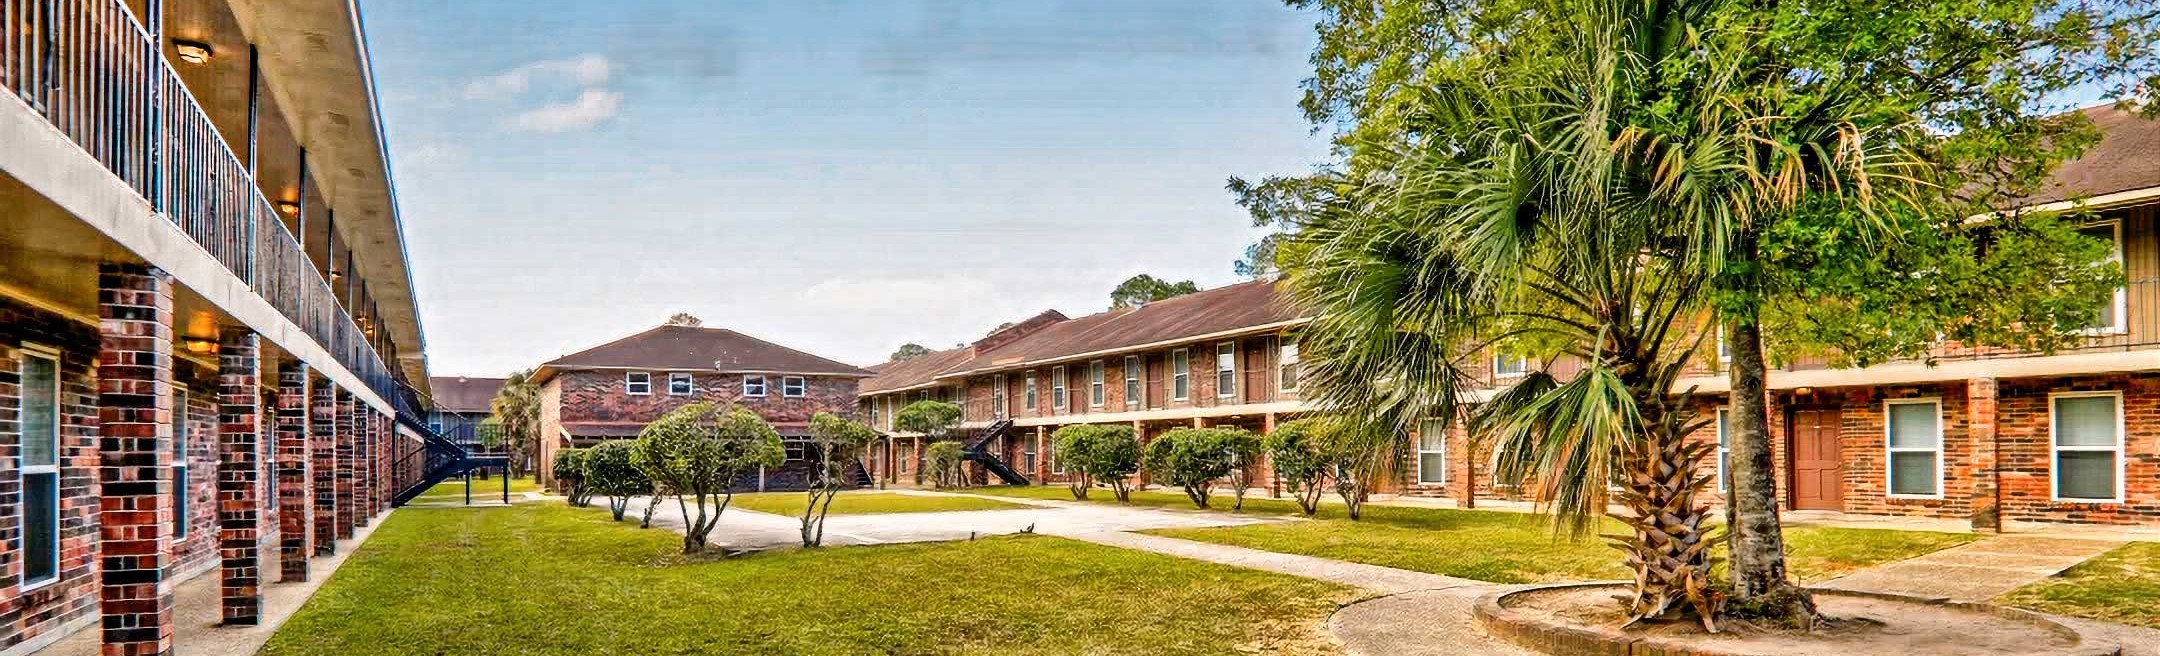 Broadmoor Plantation Apartments in Broadmoor, Baton Rouge